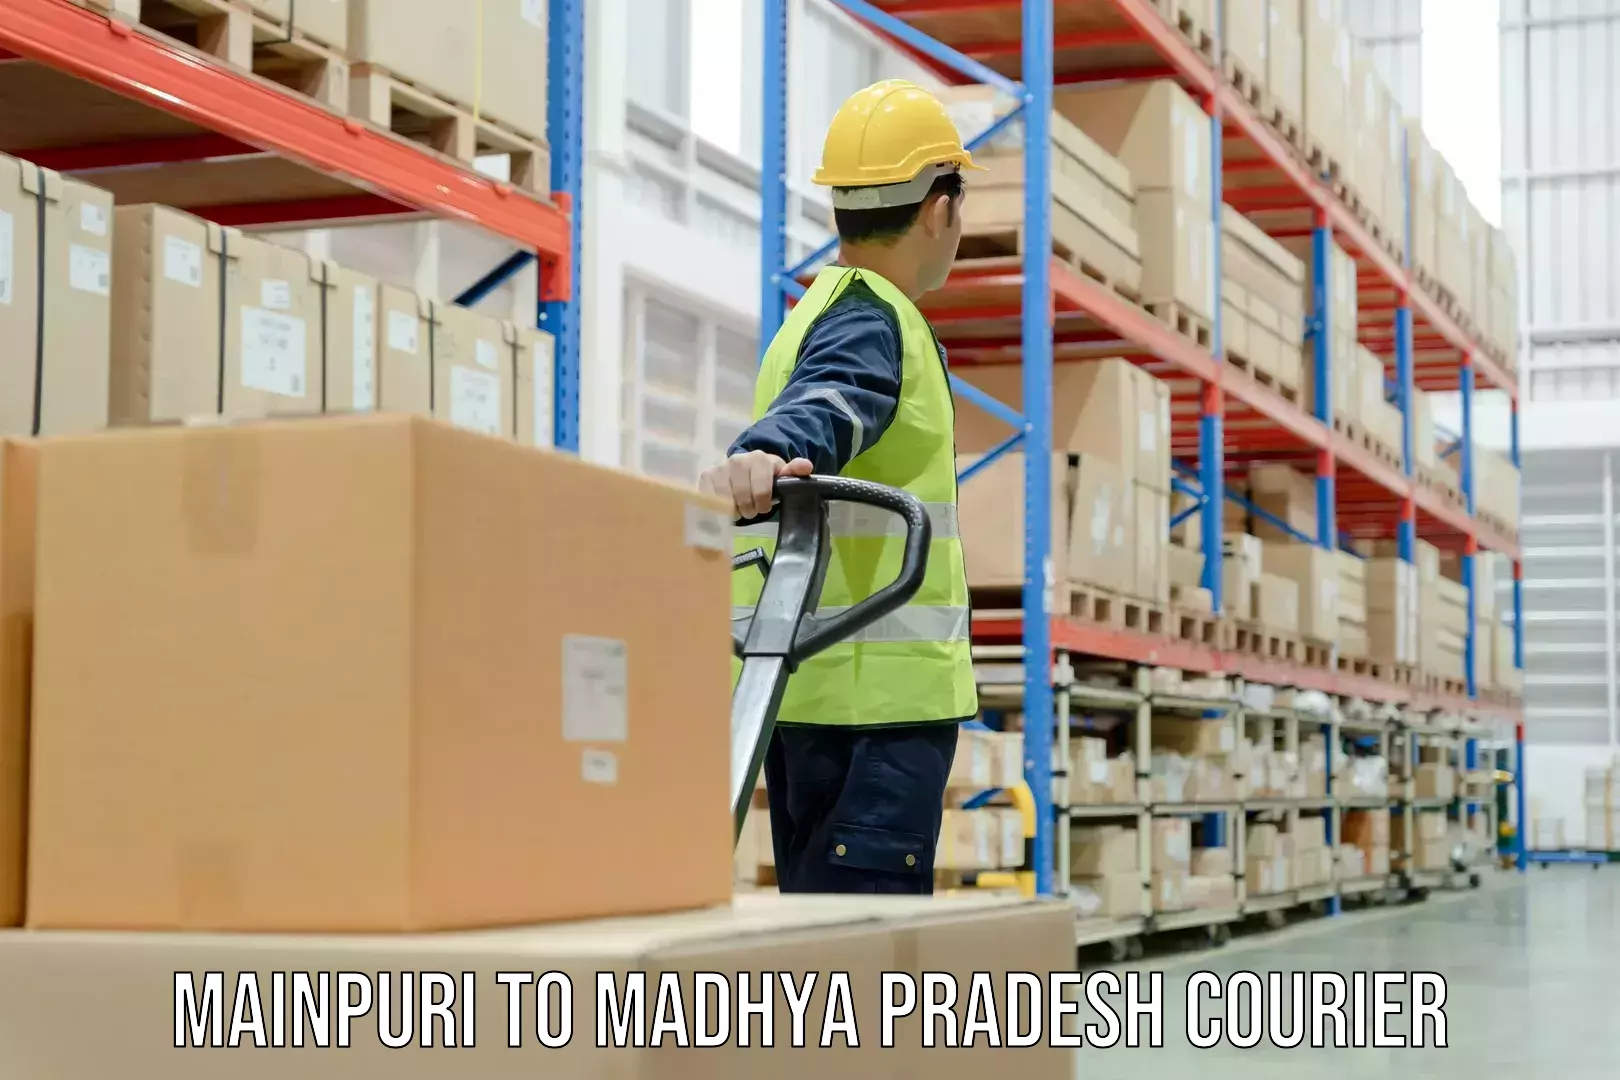 Reliable shipping partners Mainpuri to IIIT Bhopal